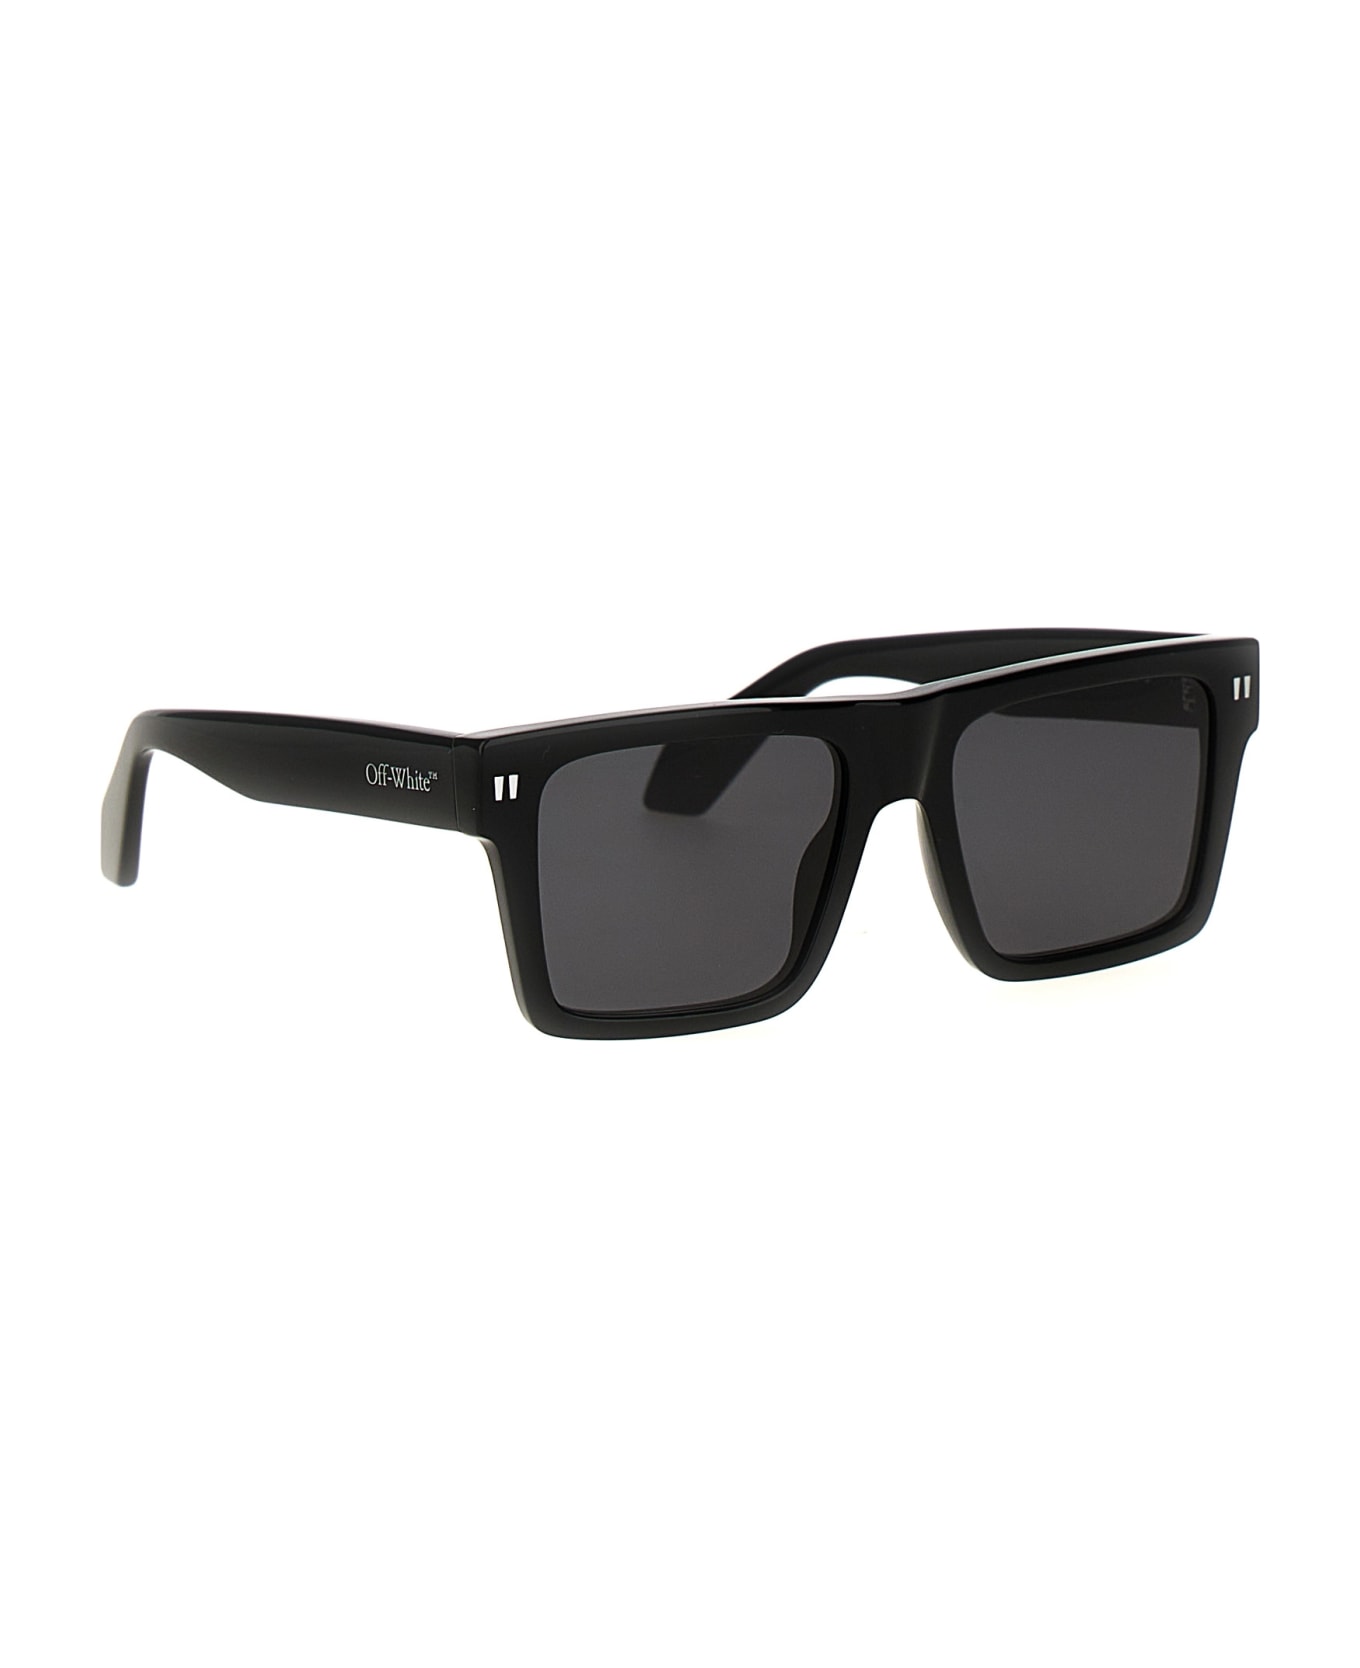 Off-White Lawton Acetate Sunglasses - Black